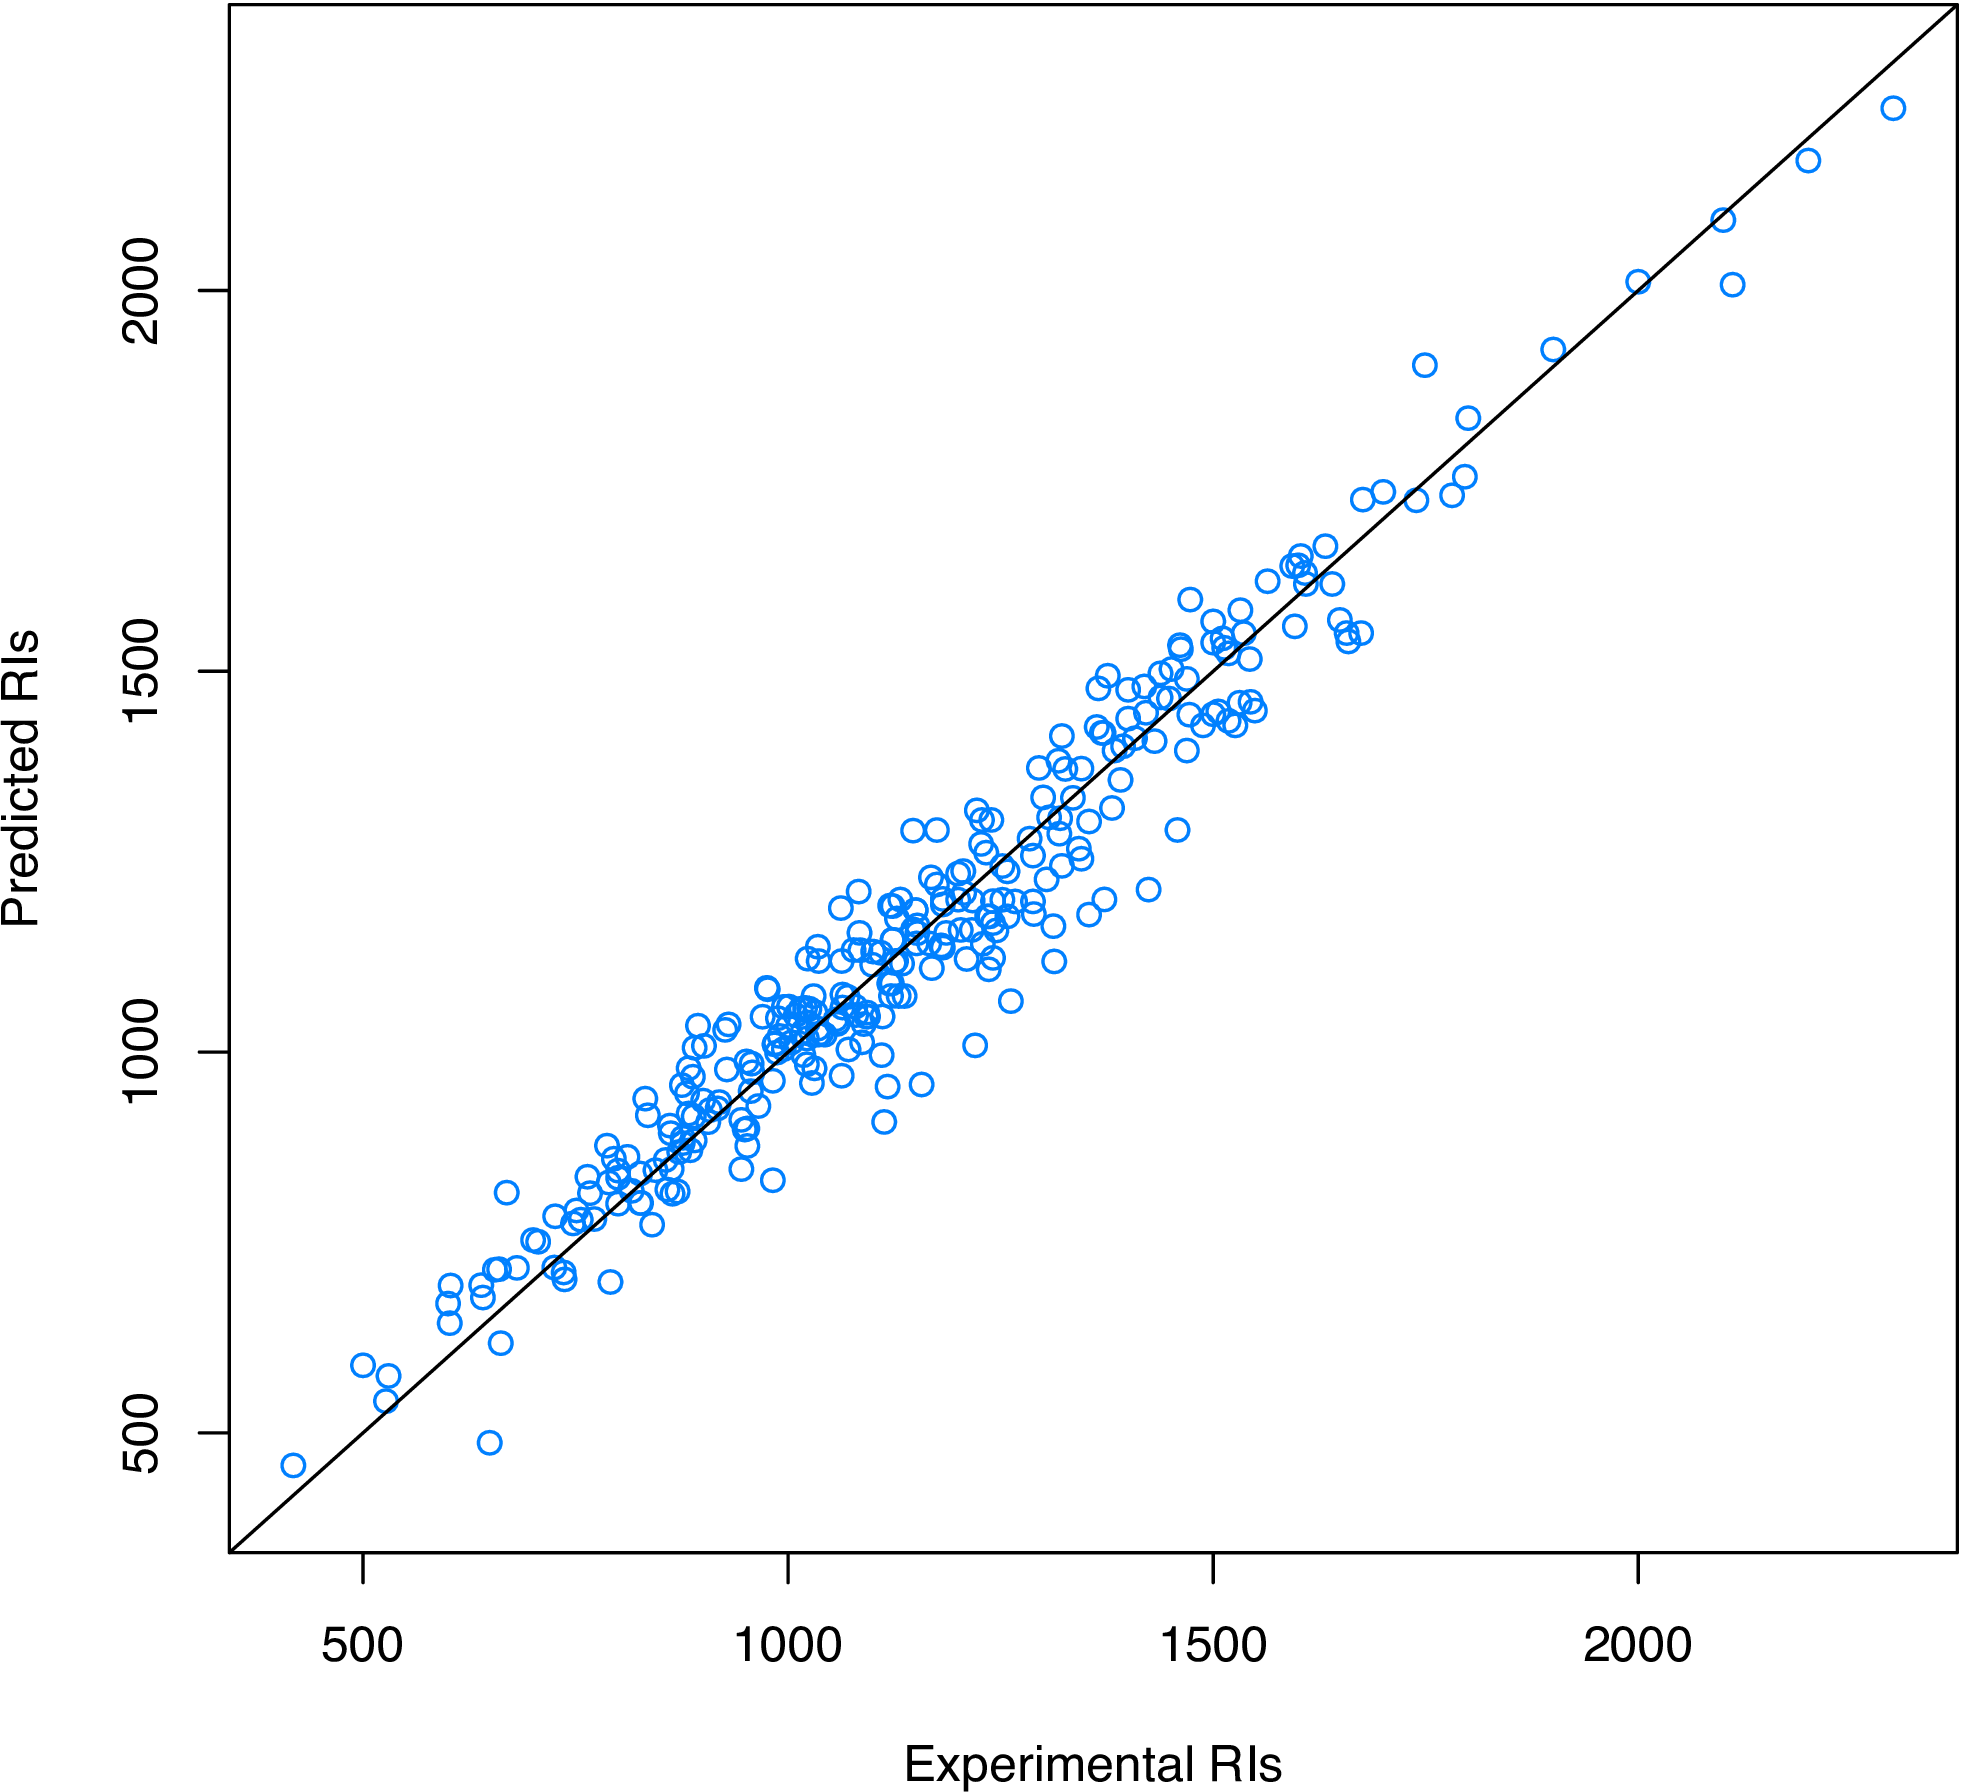 Figure 3: Experimental RIs vs. predicted RIs.